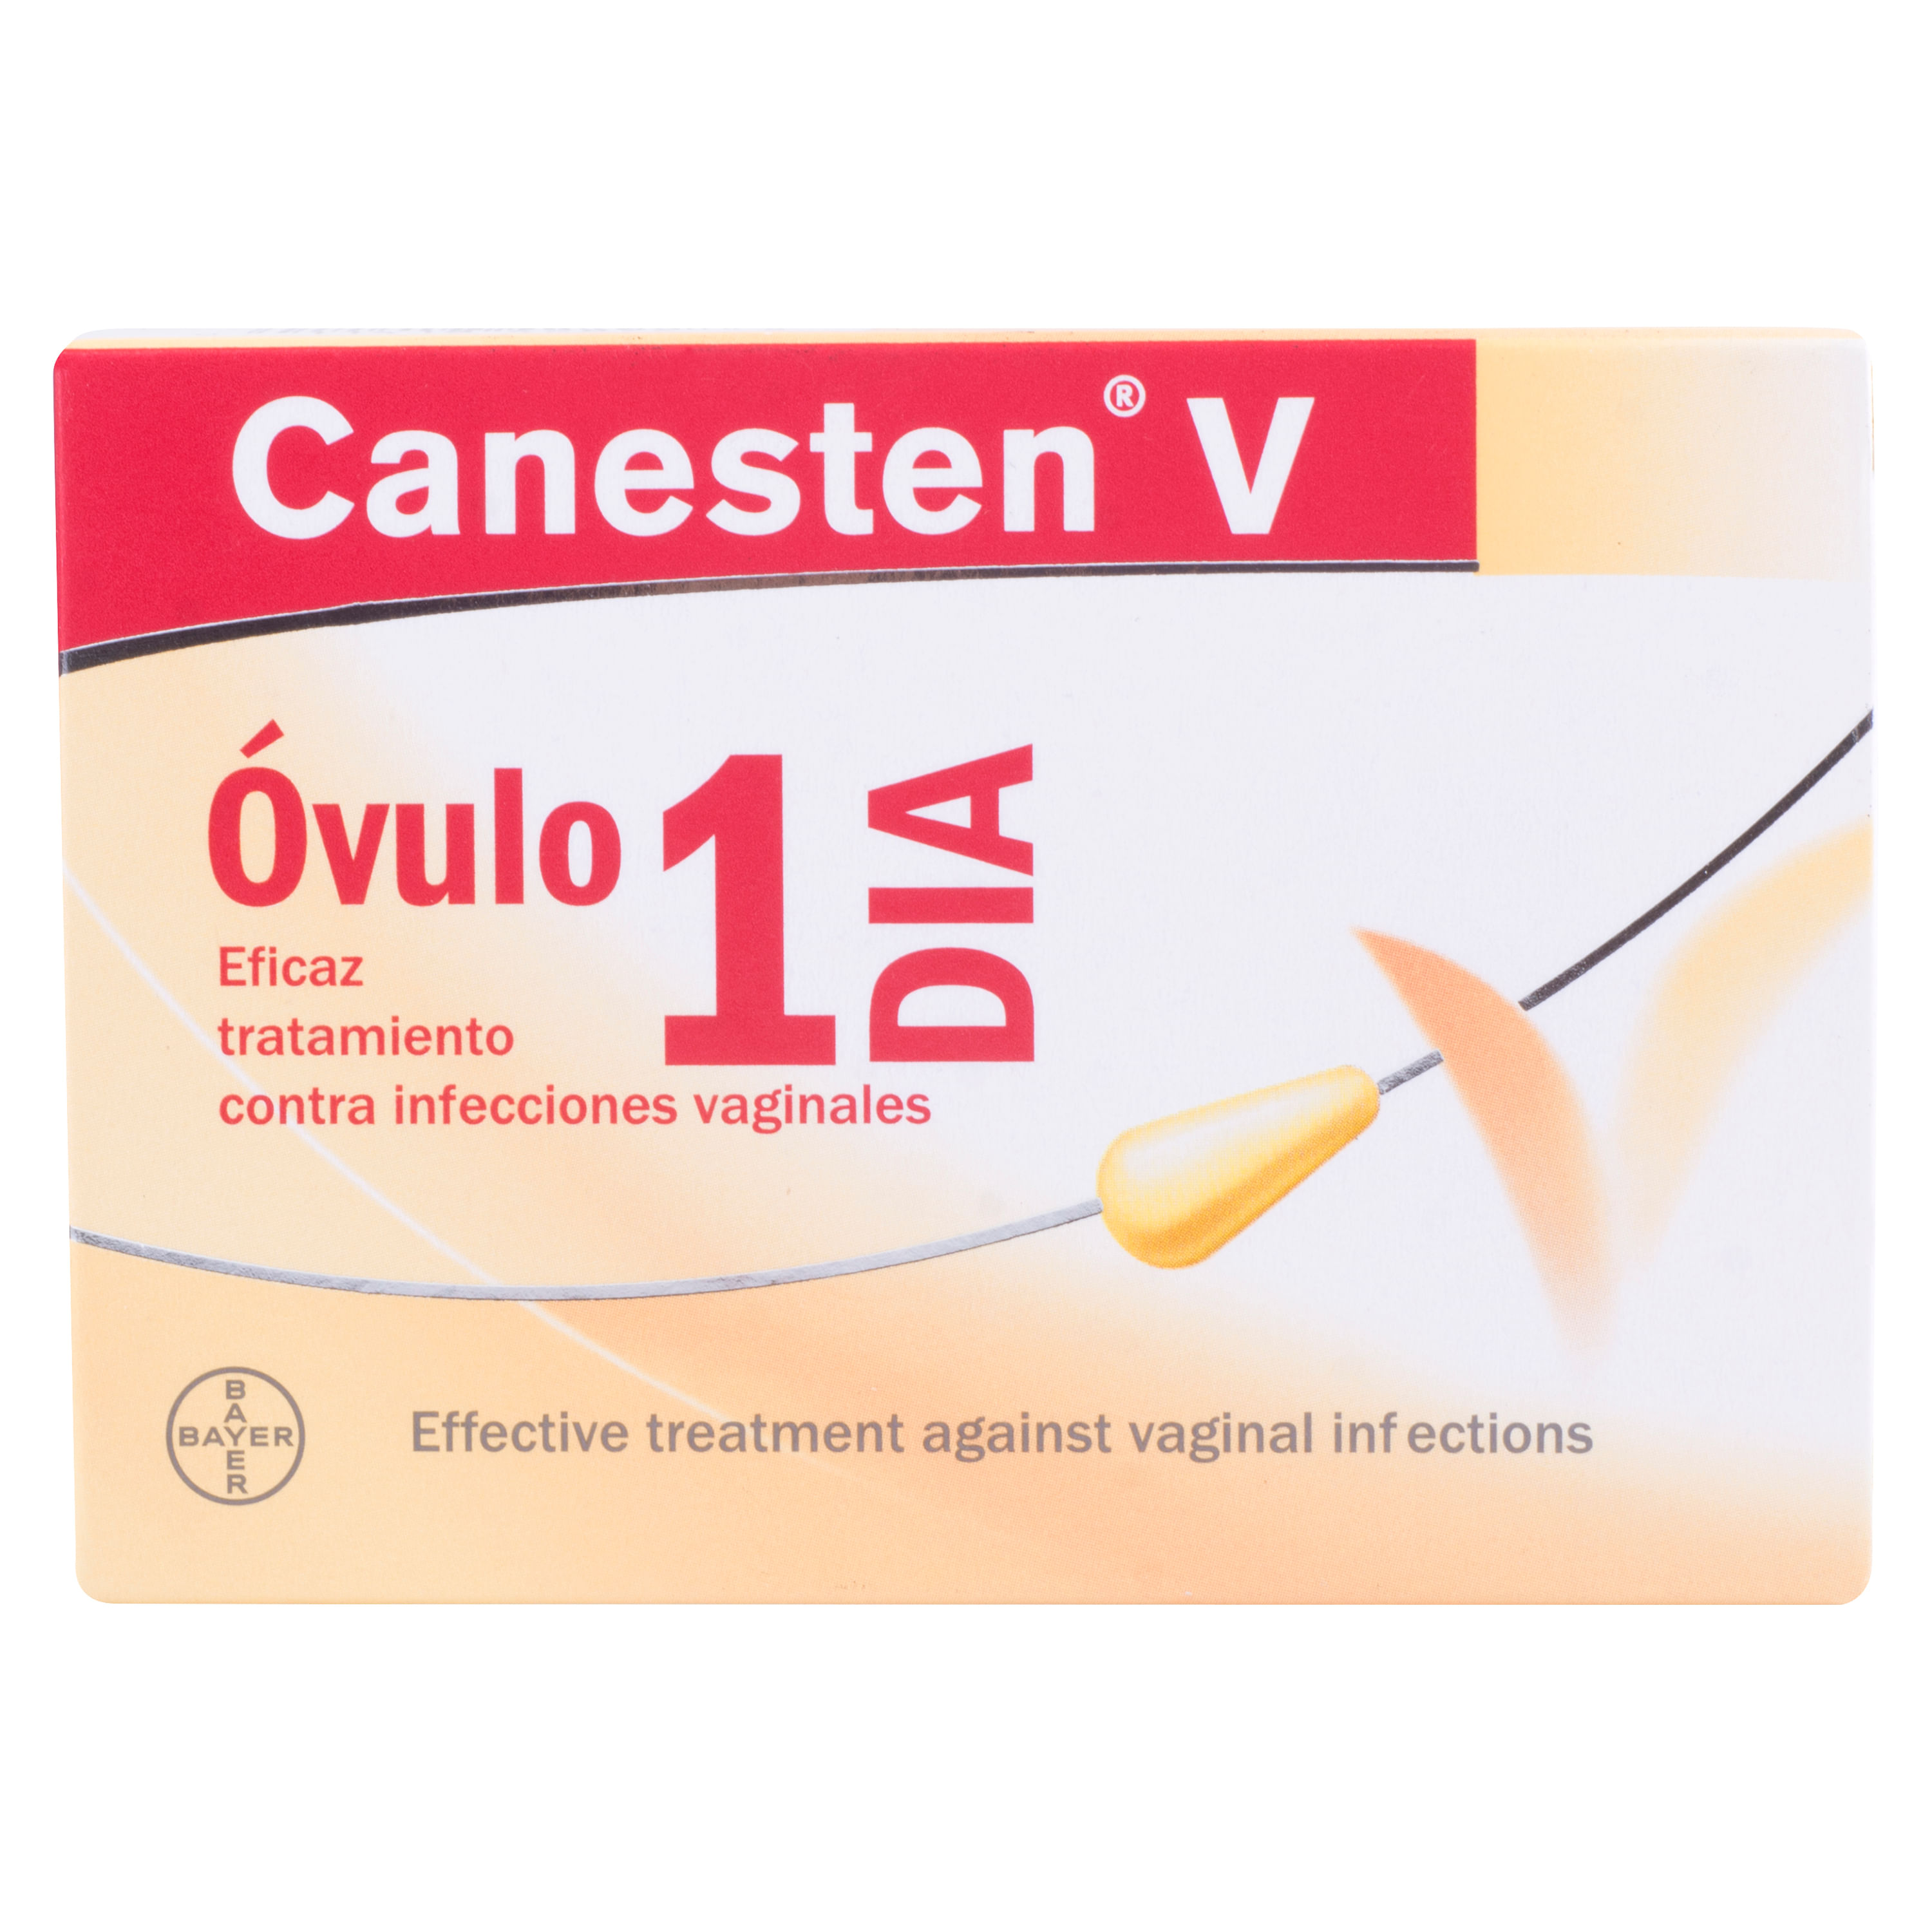 Canesten-V-vulo-1-Dia-500Mg-1-927